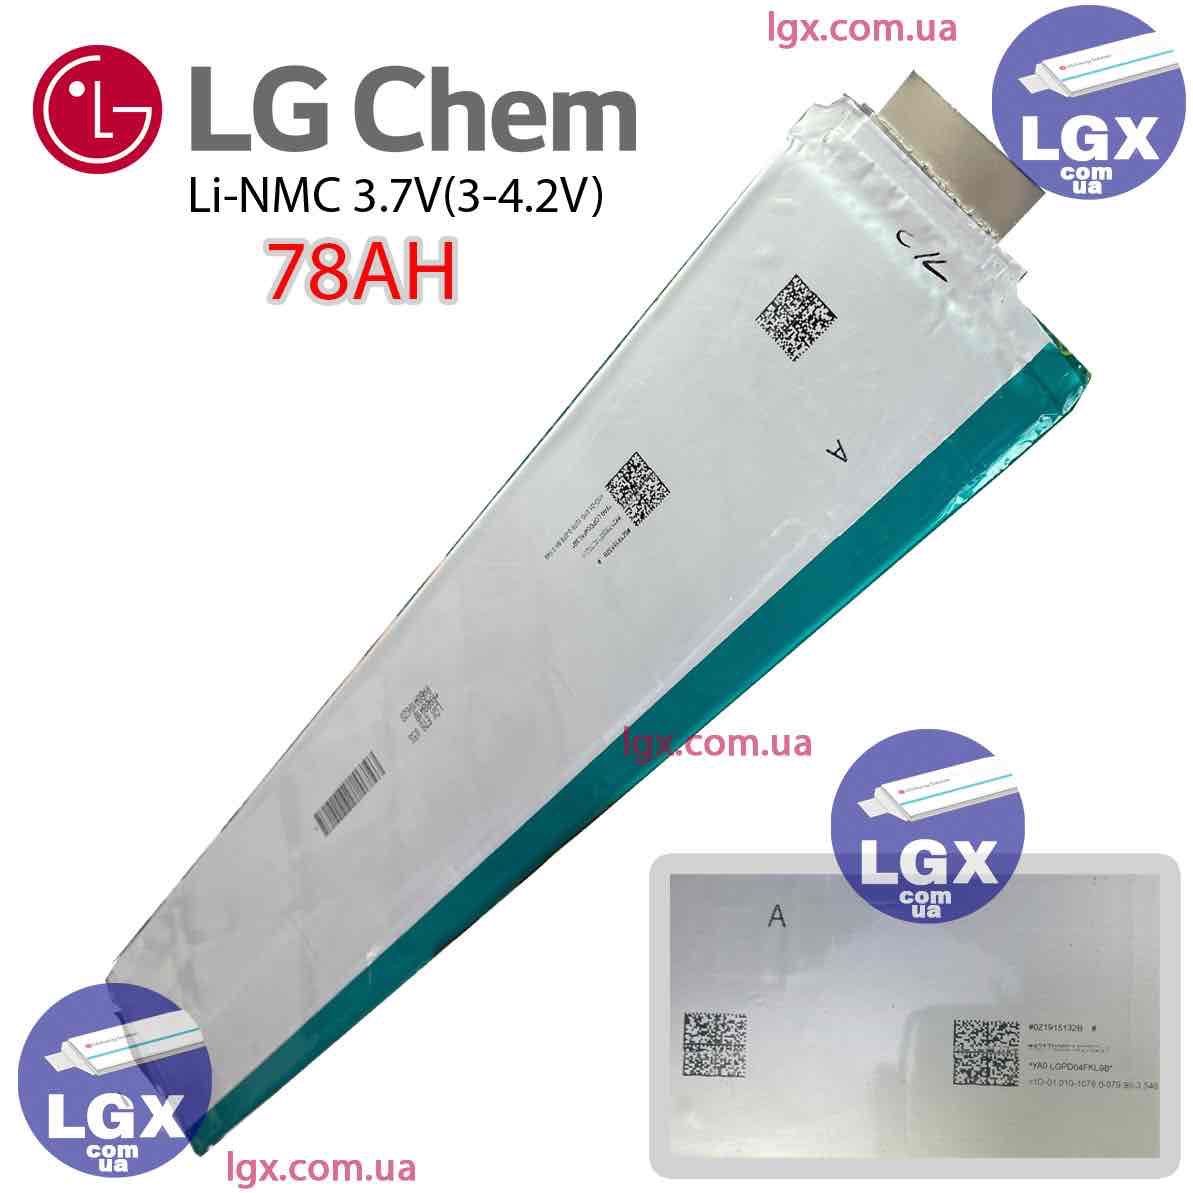 Аккумуляторный елемент LG-Chem LGX-e78N химия NMC 3.6v (пакет) емкость 78А/Ч разряд 3-5c 2000 циклов 1180грам